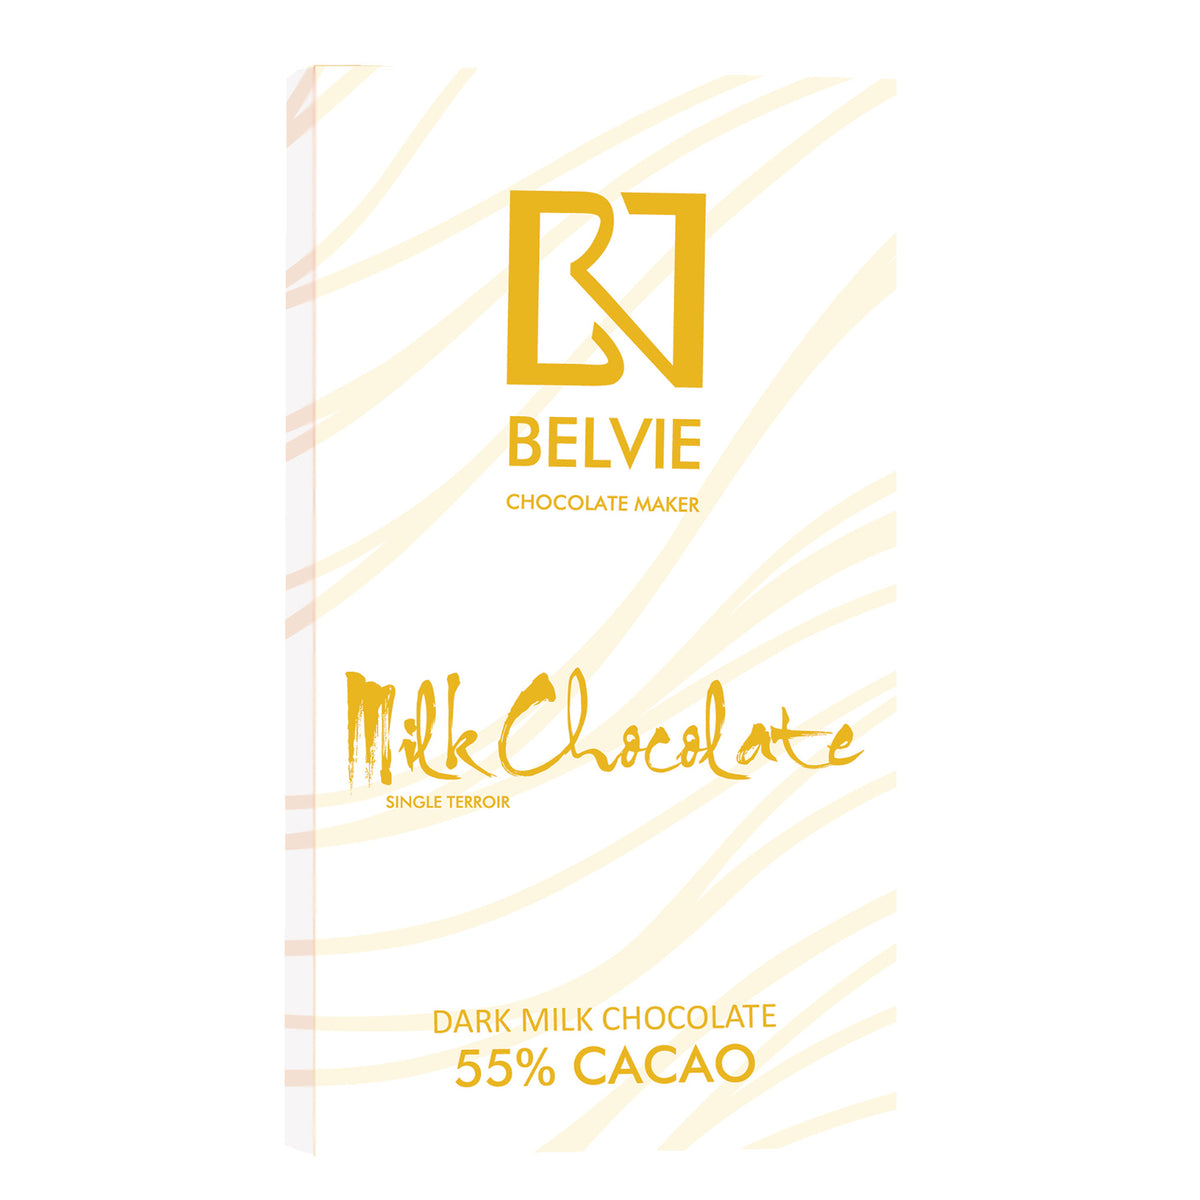 Belvie Chocolate Maker Đồng Nai, Vietnam 55% Dark Milk